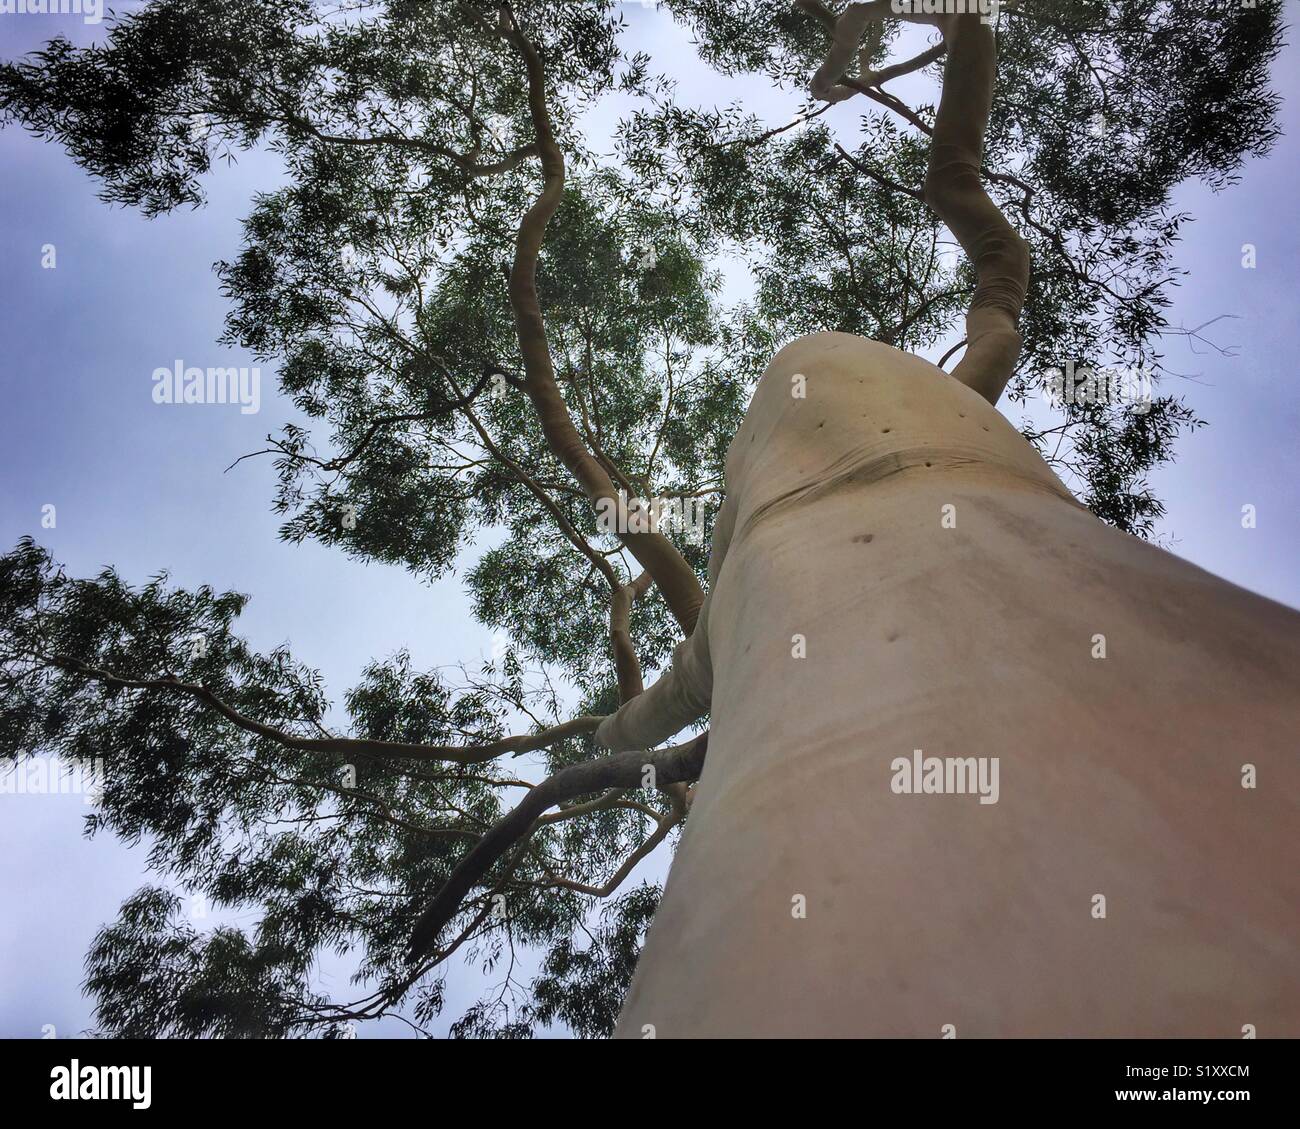 Looking up at eucalyptus tree Stock Photo